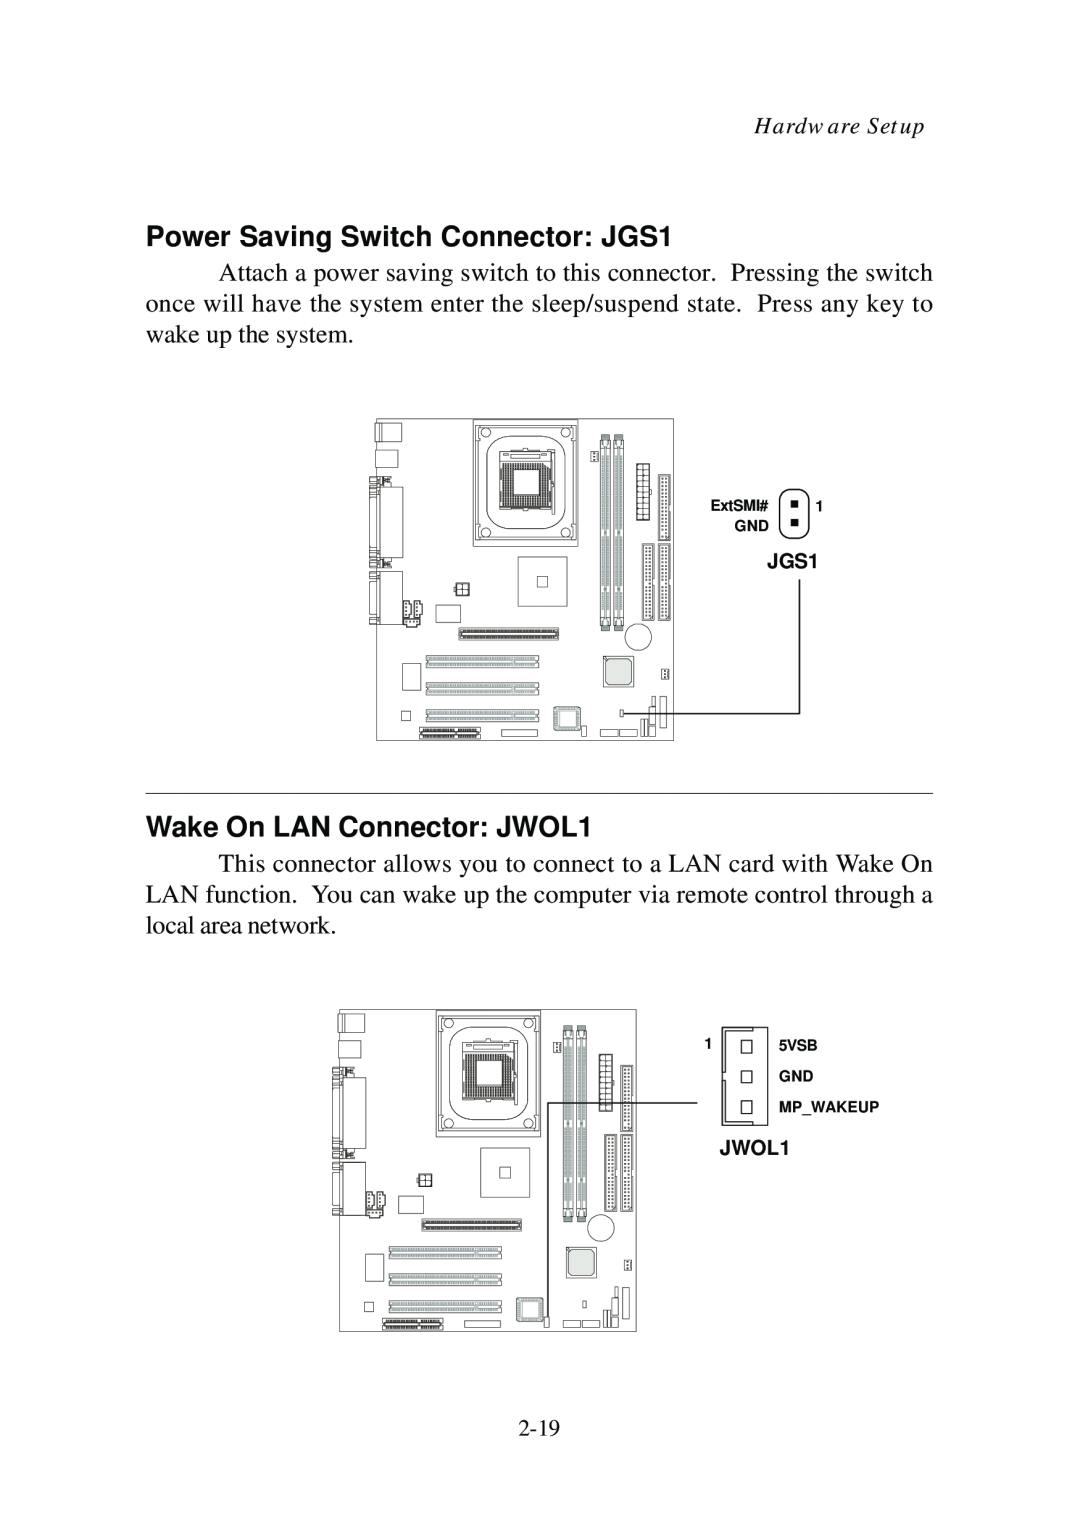 Premio Computer Aries/Centella manual Power Saving Switch Connector JGS1, Wake On LAN Connector JWOL1 